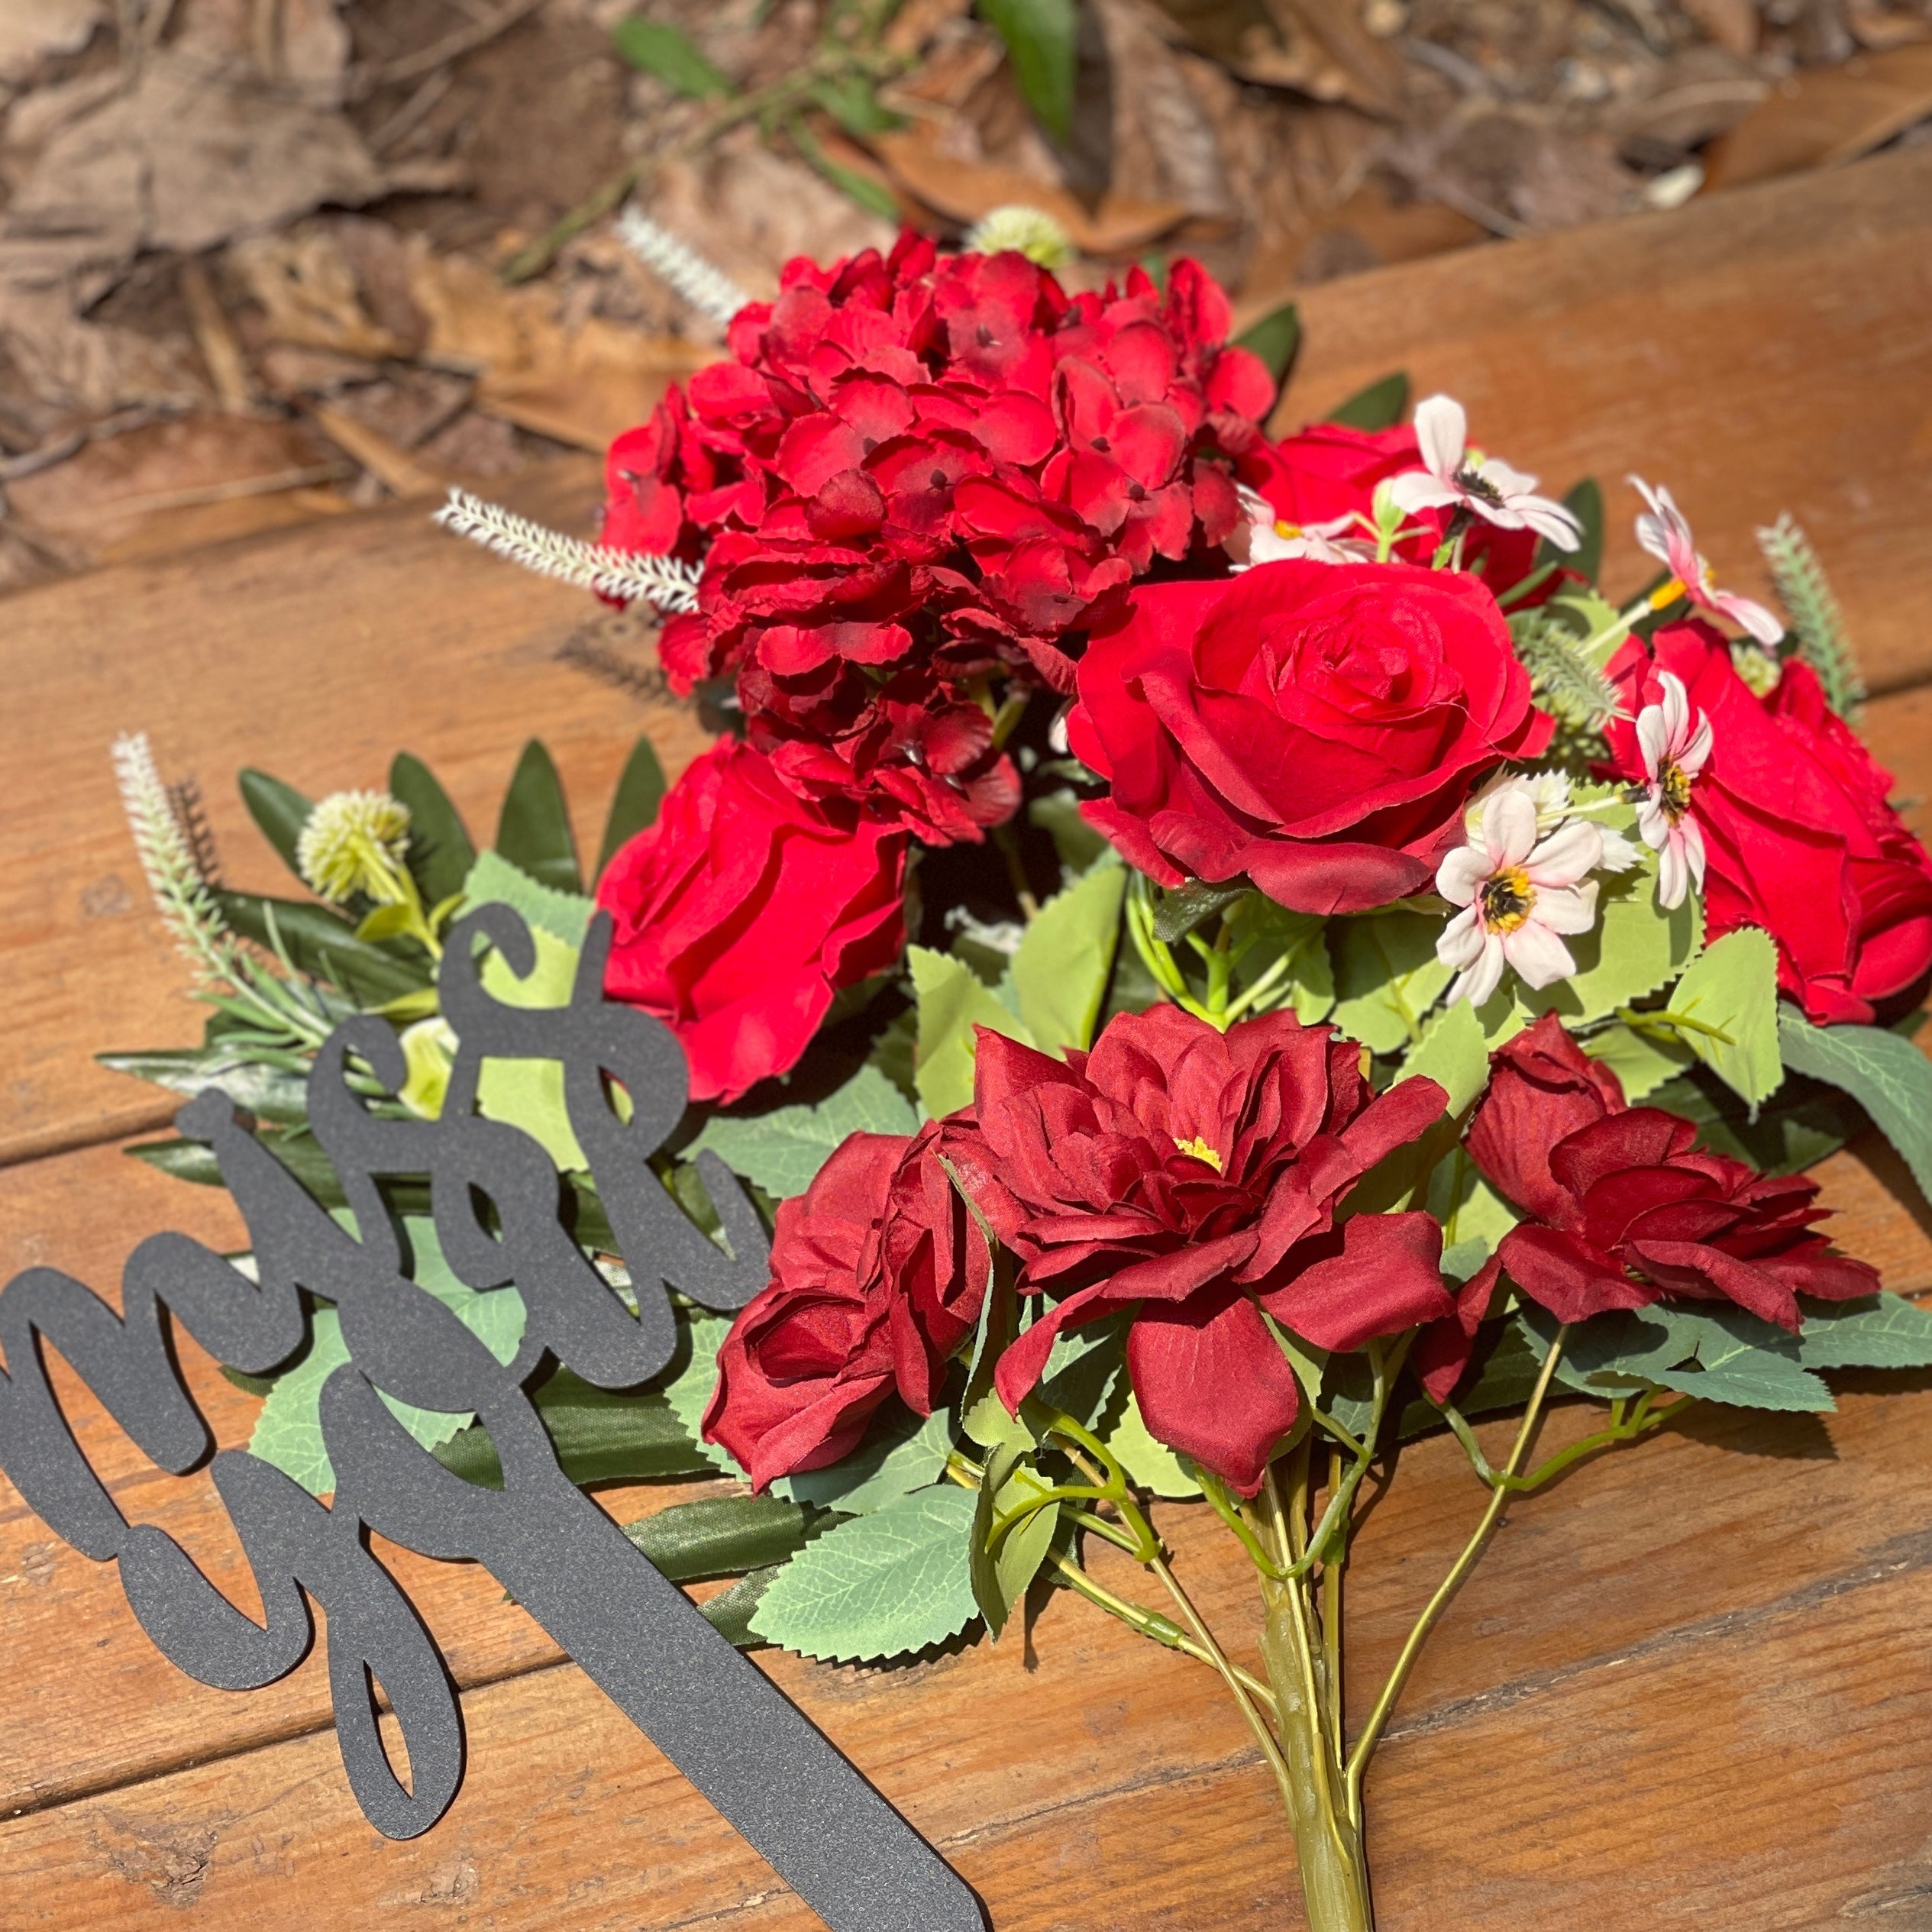 Bulk Summer Memorial Flowers with Vase Red Rose Graveyard Grave Flowers Wholesale